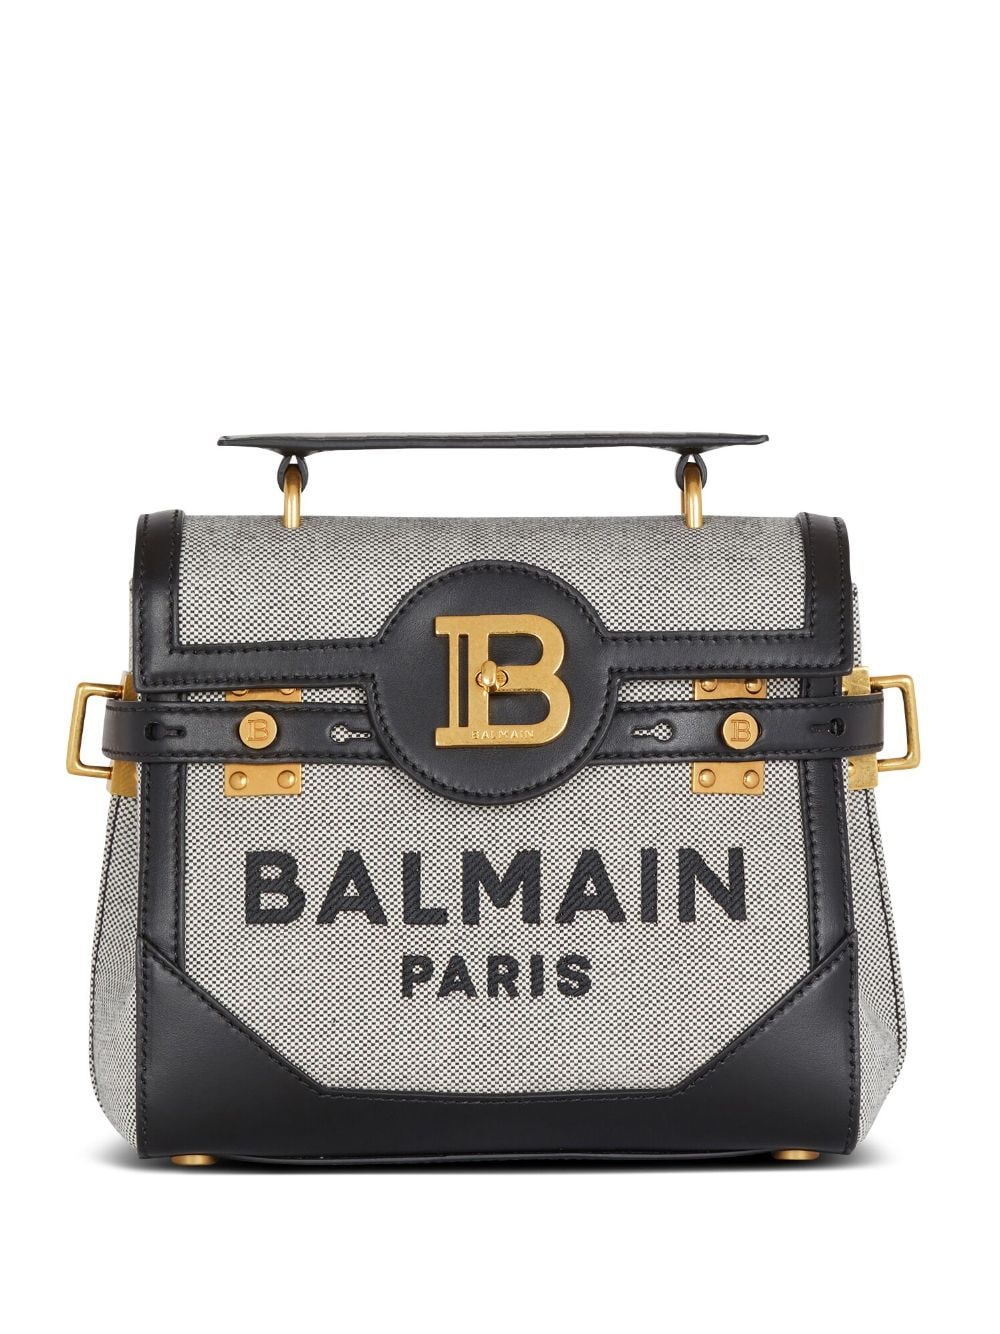 BALMAIN B-Buzz 23 Handbag in Mixed Colors for Women